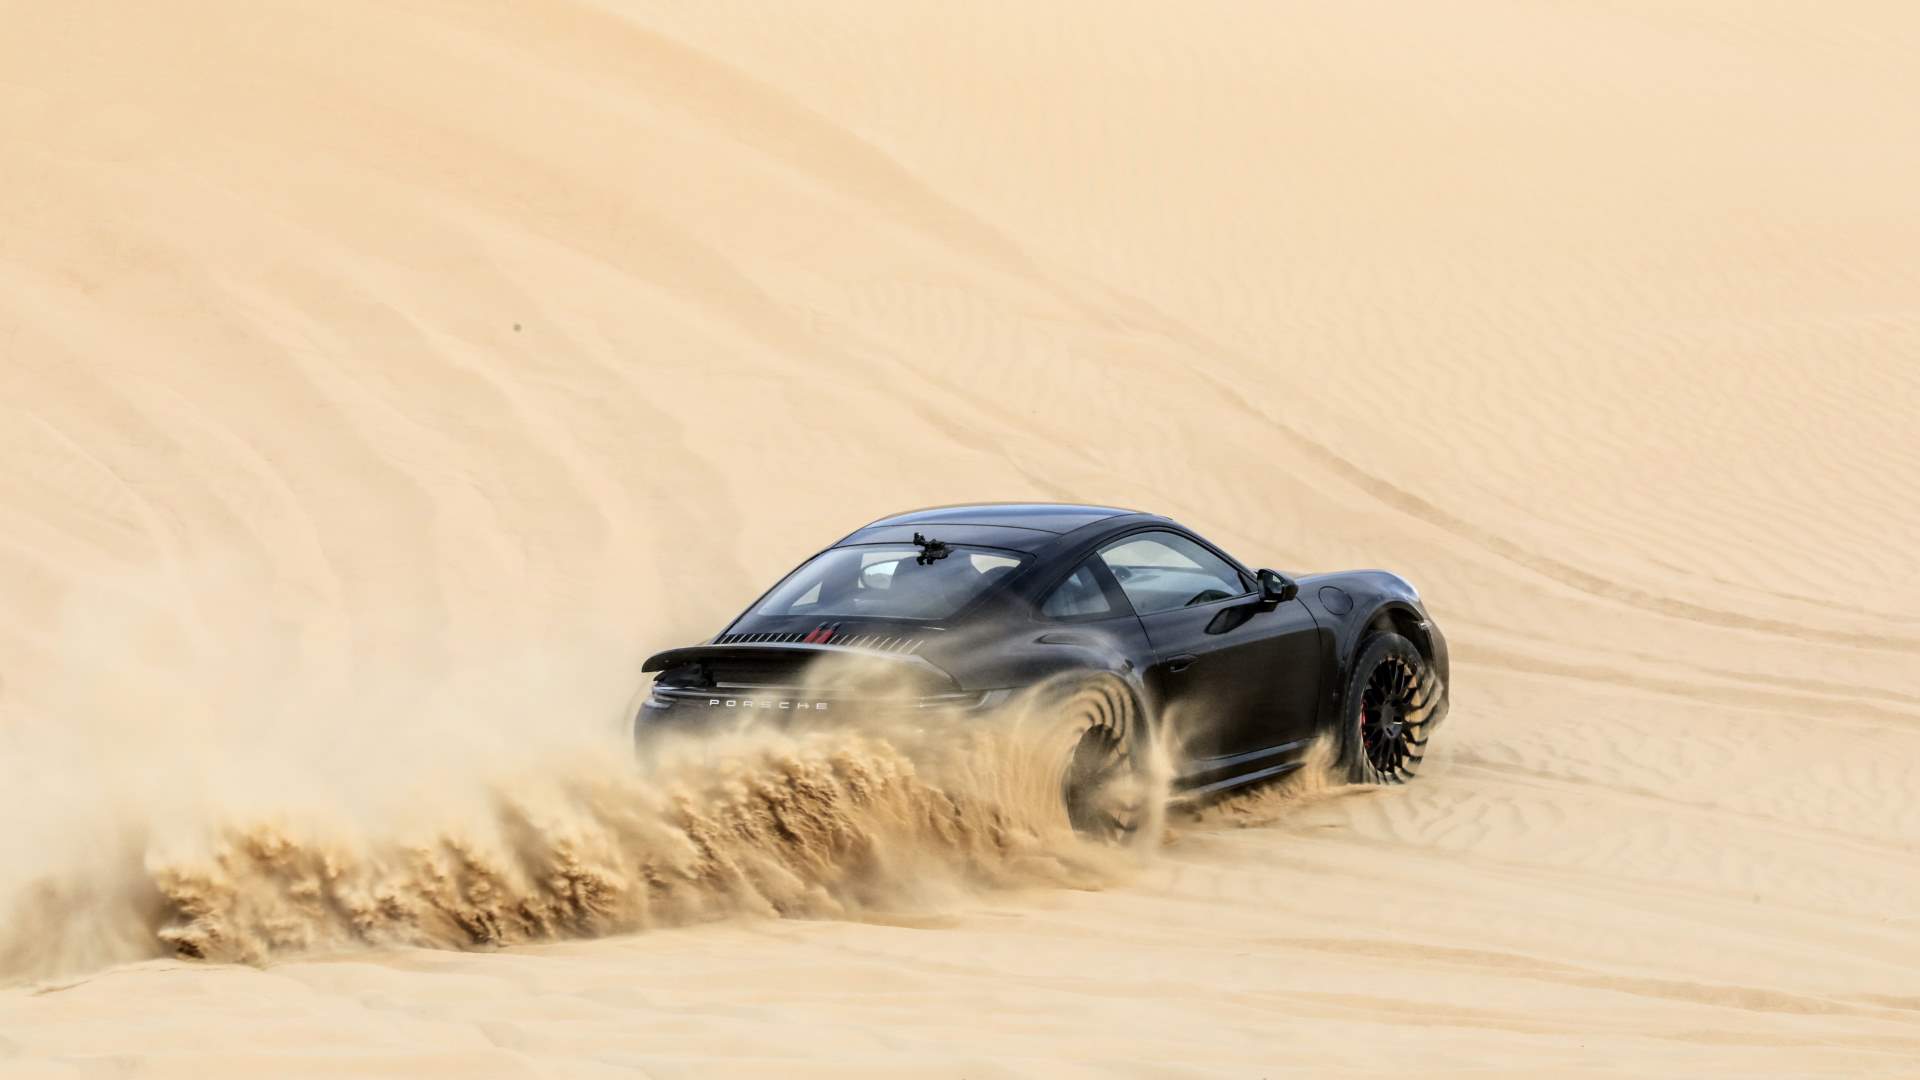 Image: Porsche